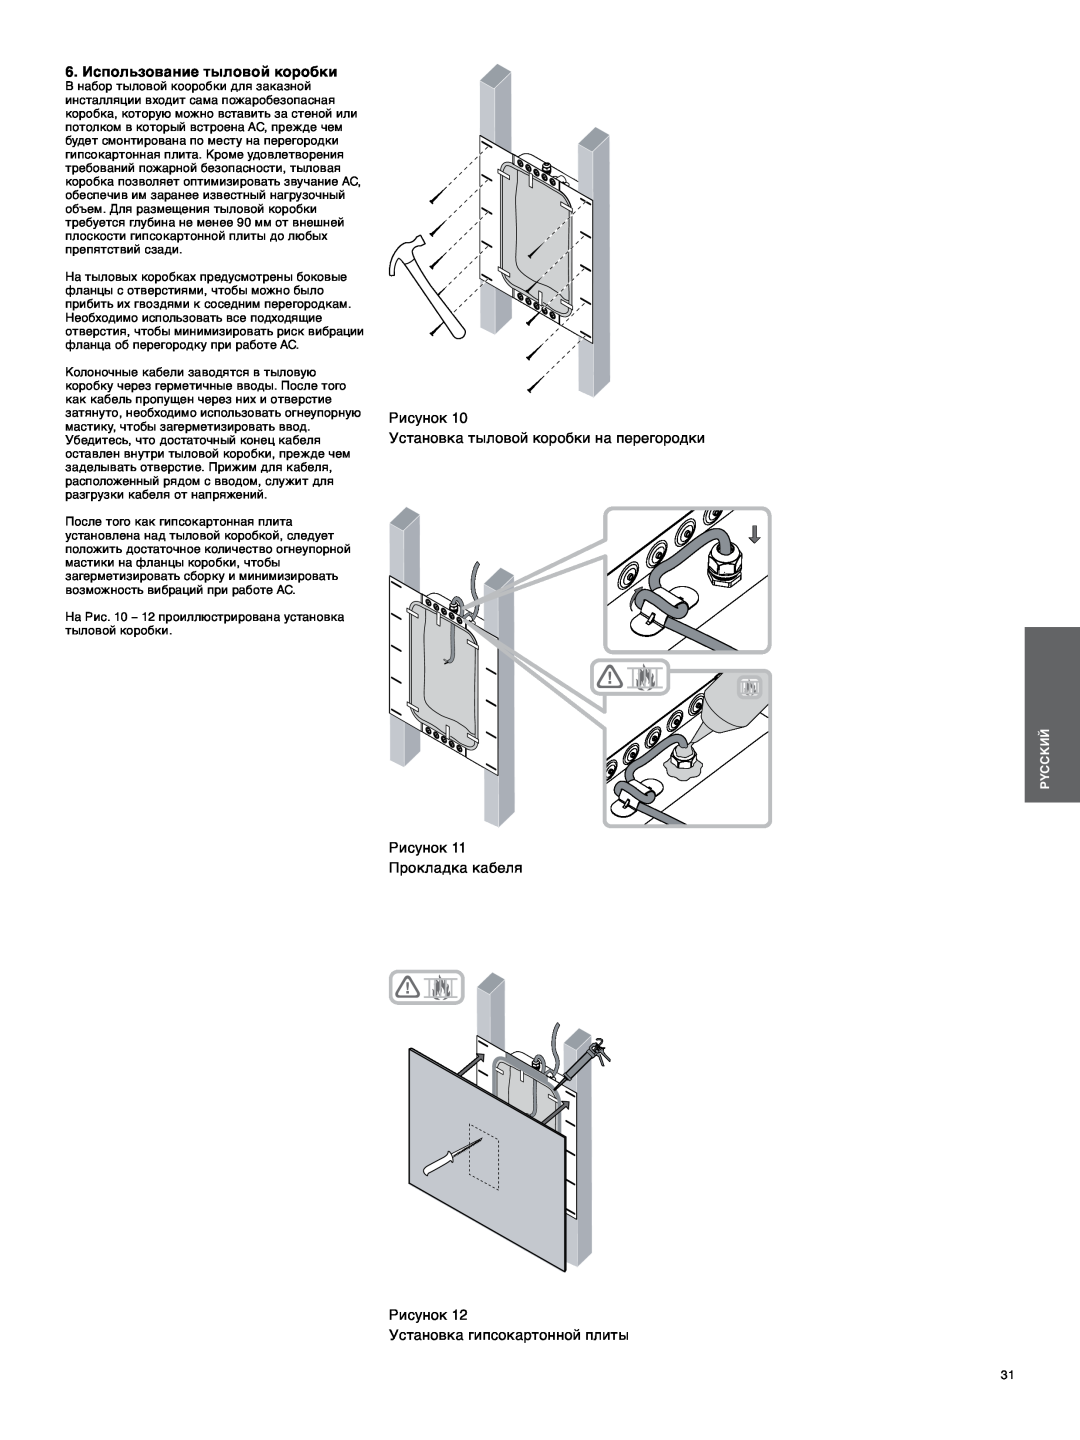 Bowers & Wilkins CWM3 manual 6. Использование тыловой коробки, Рисунок Установка тыловой коробки на перегородки, Pyccкий 